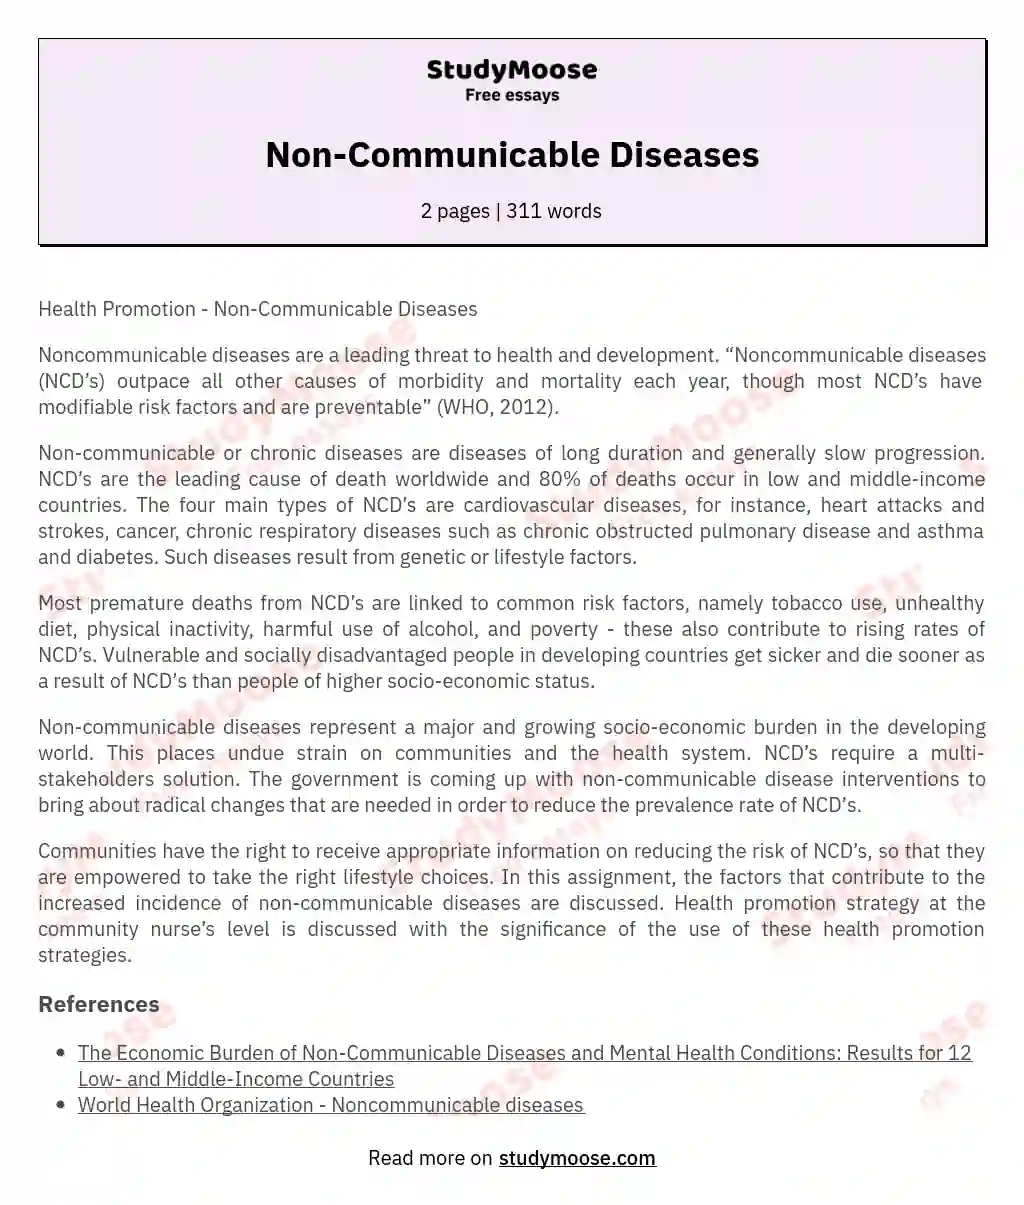 Non-Communicable Diseases essay